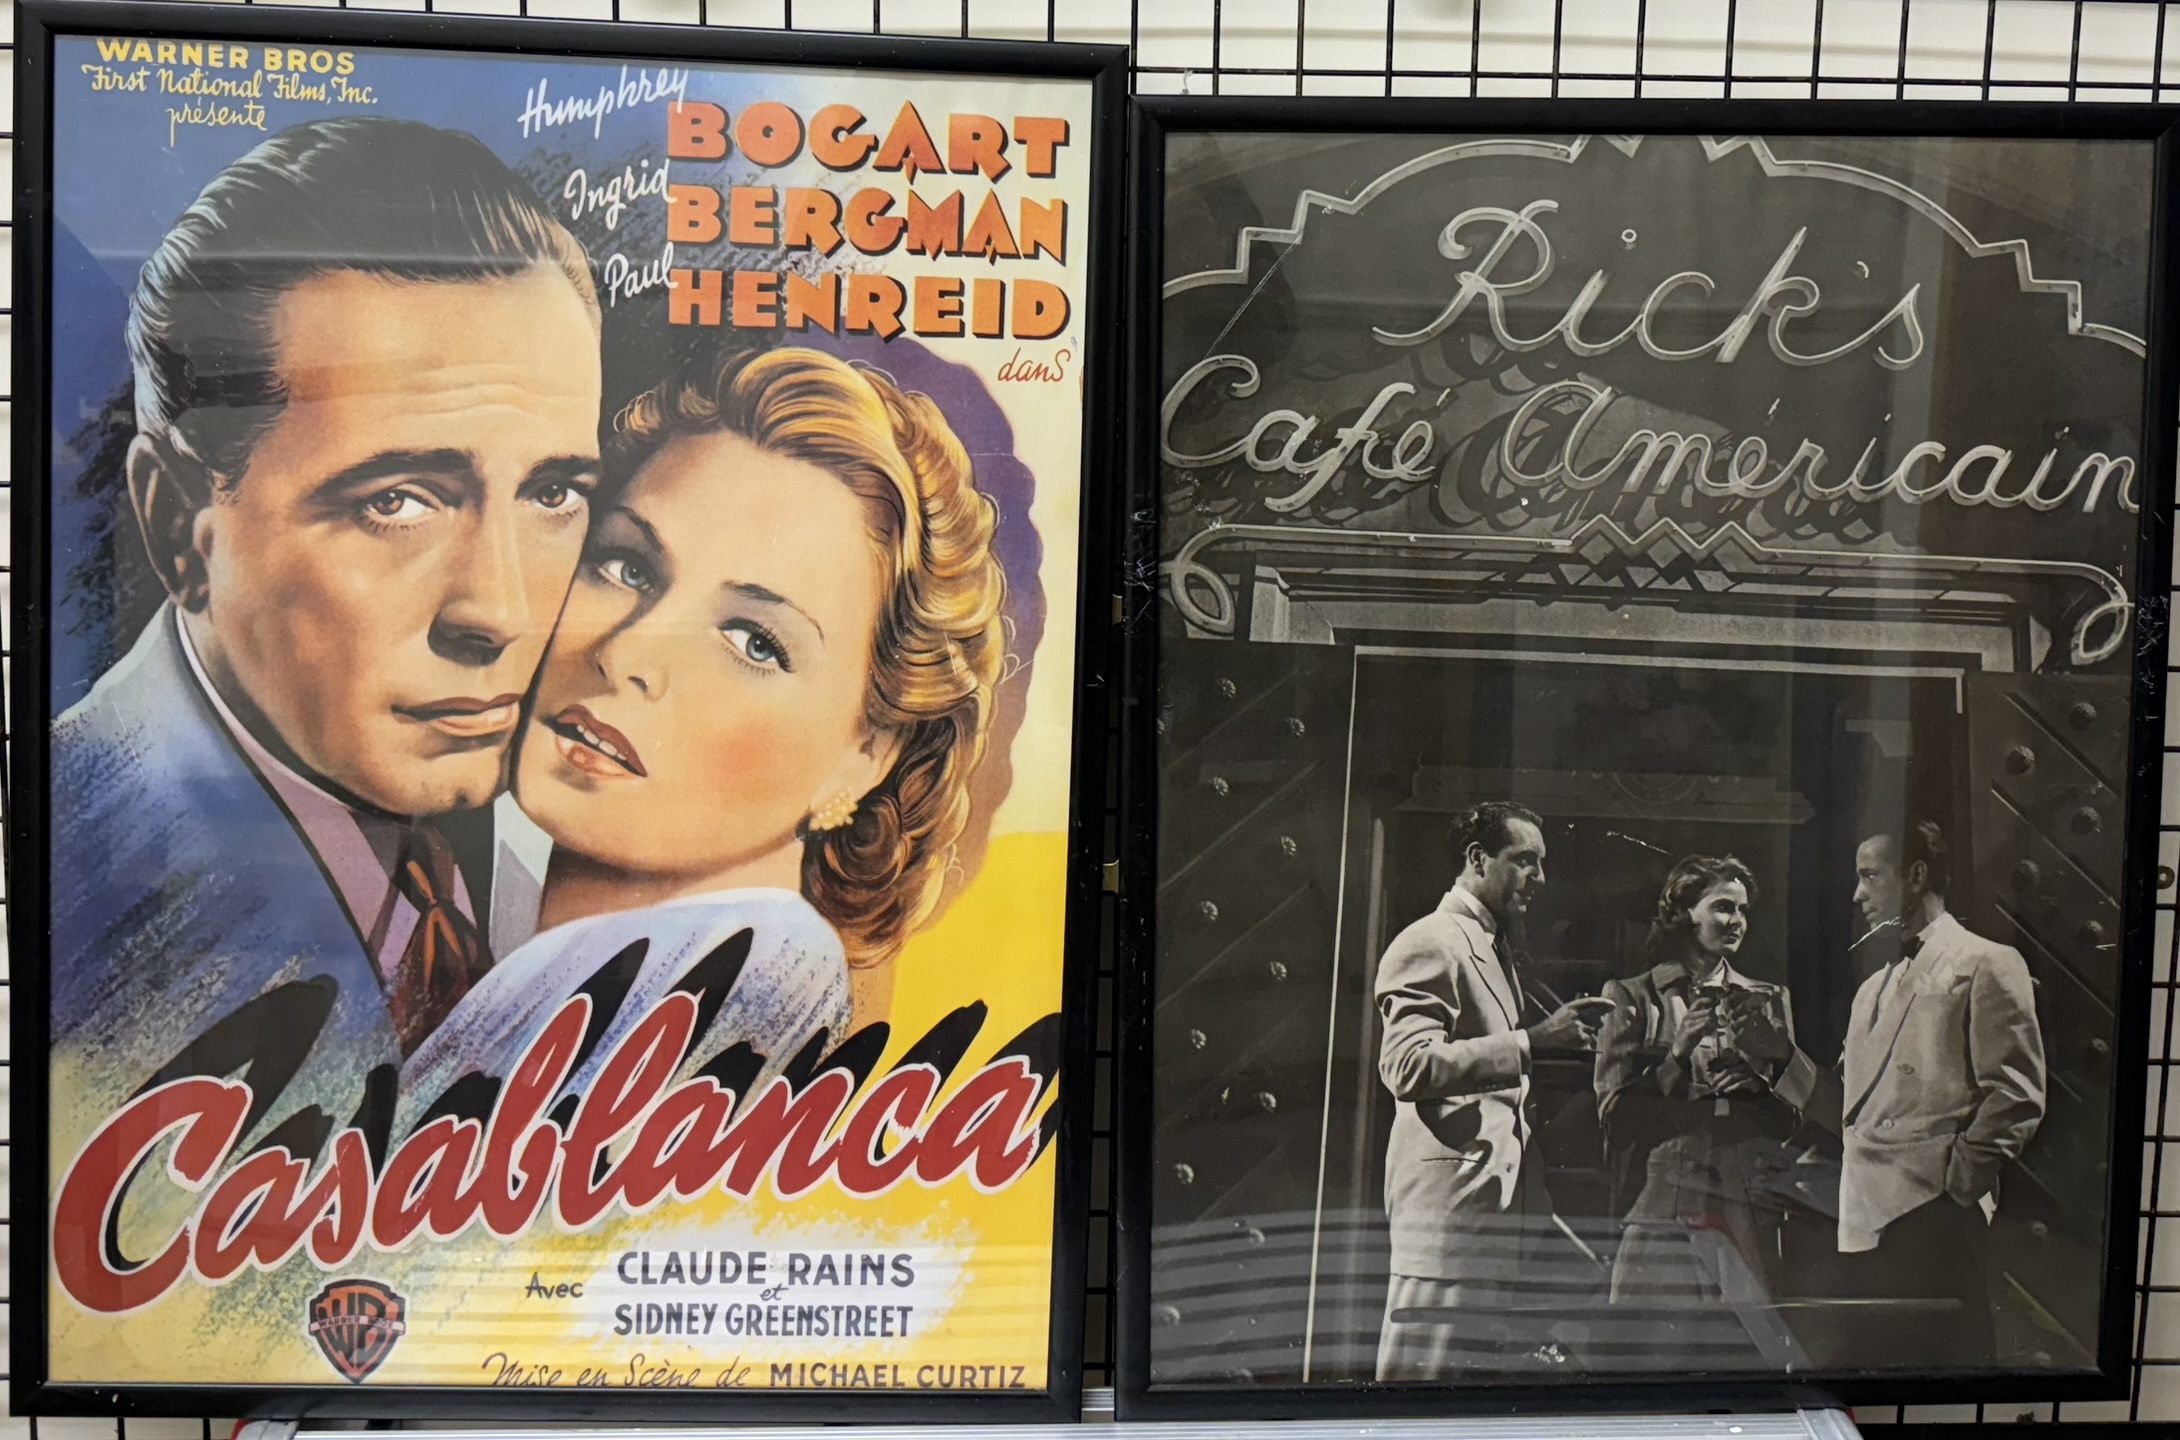 A Warner Bros poster for Casablanca, with Humphrey Bogart, Ingrid Bergman and Paul Henreid,